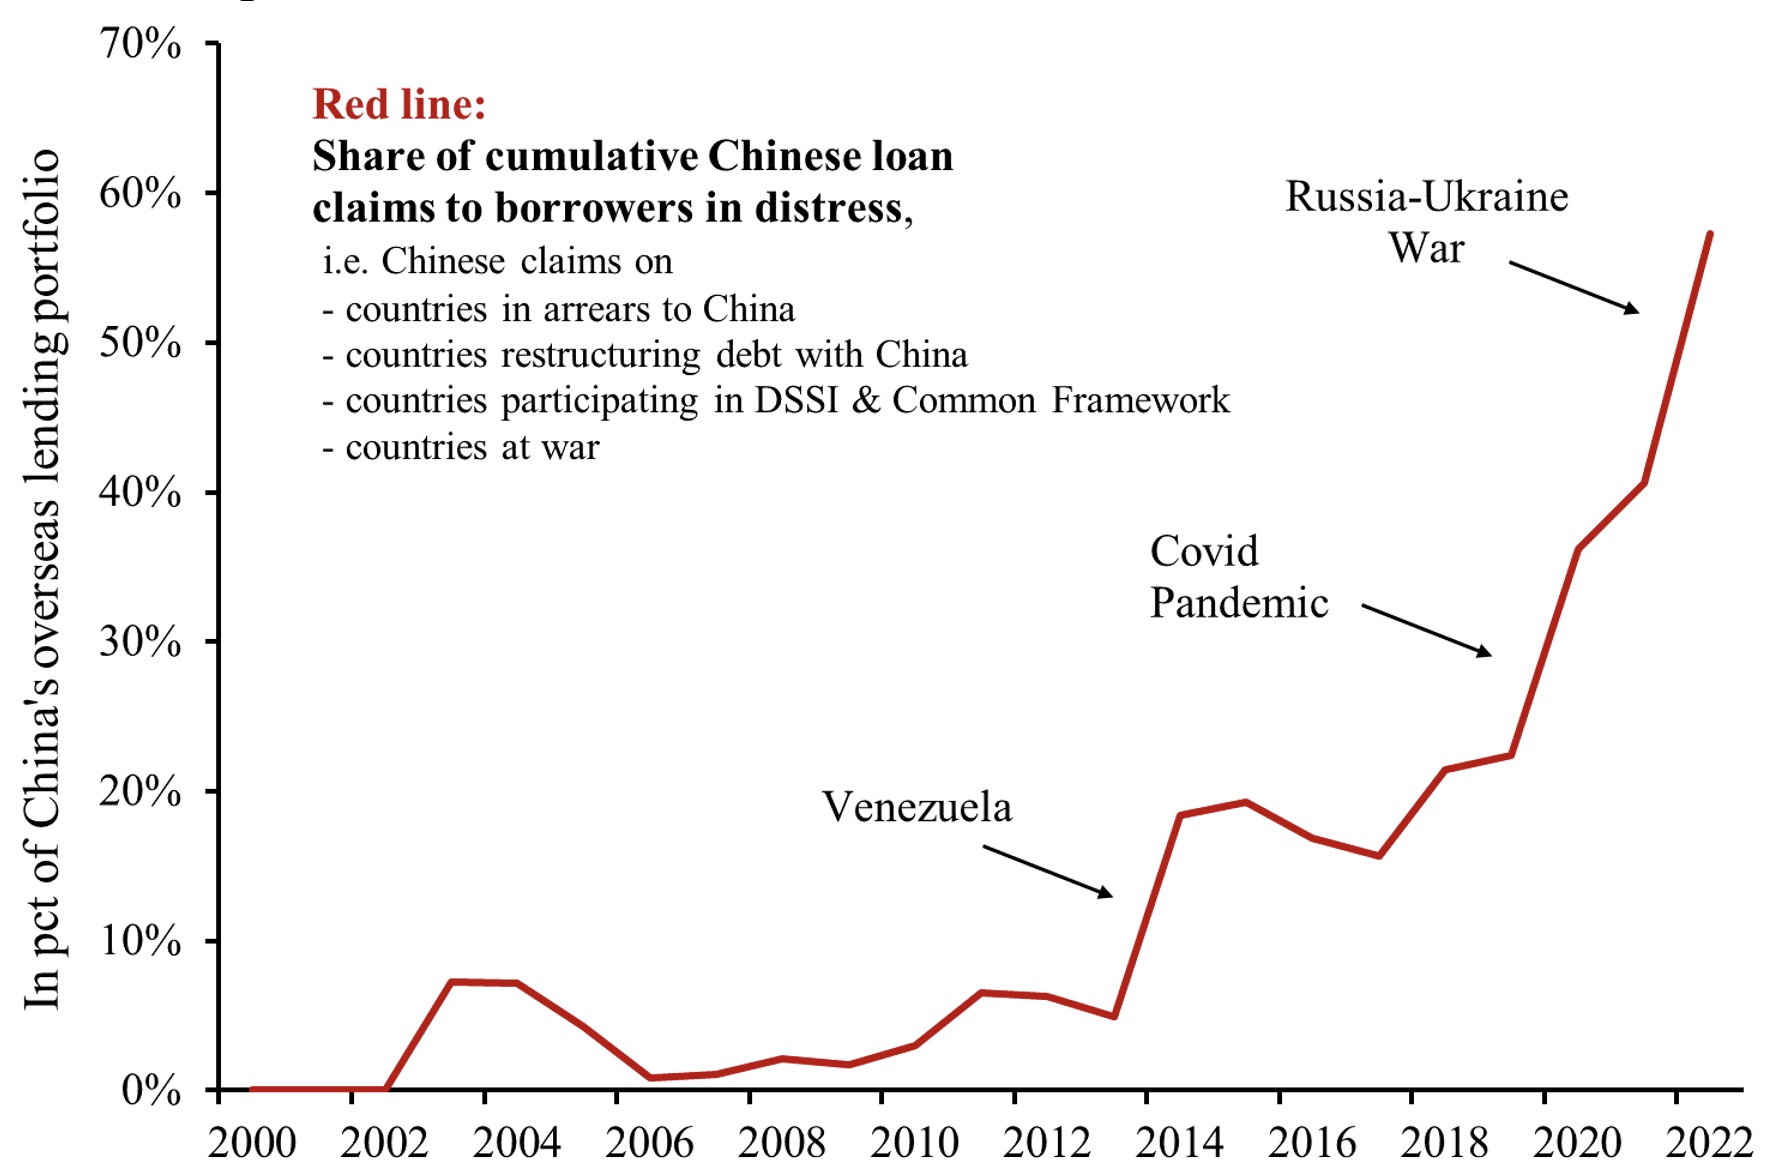 China’s overseas lending and the war in Ukraine 2